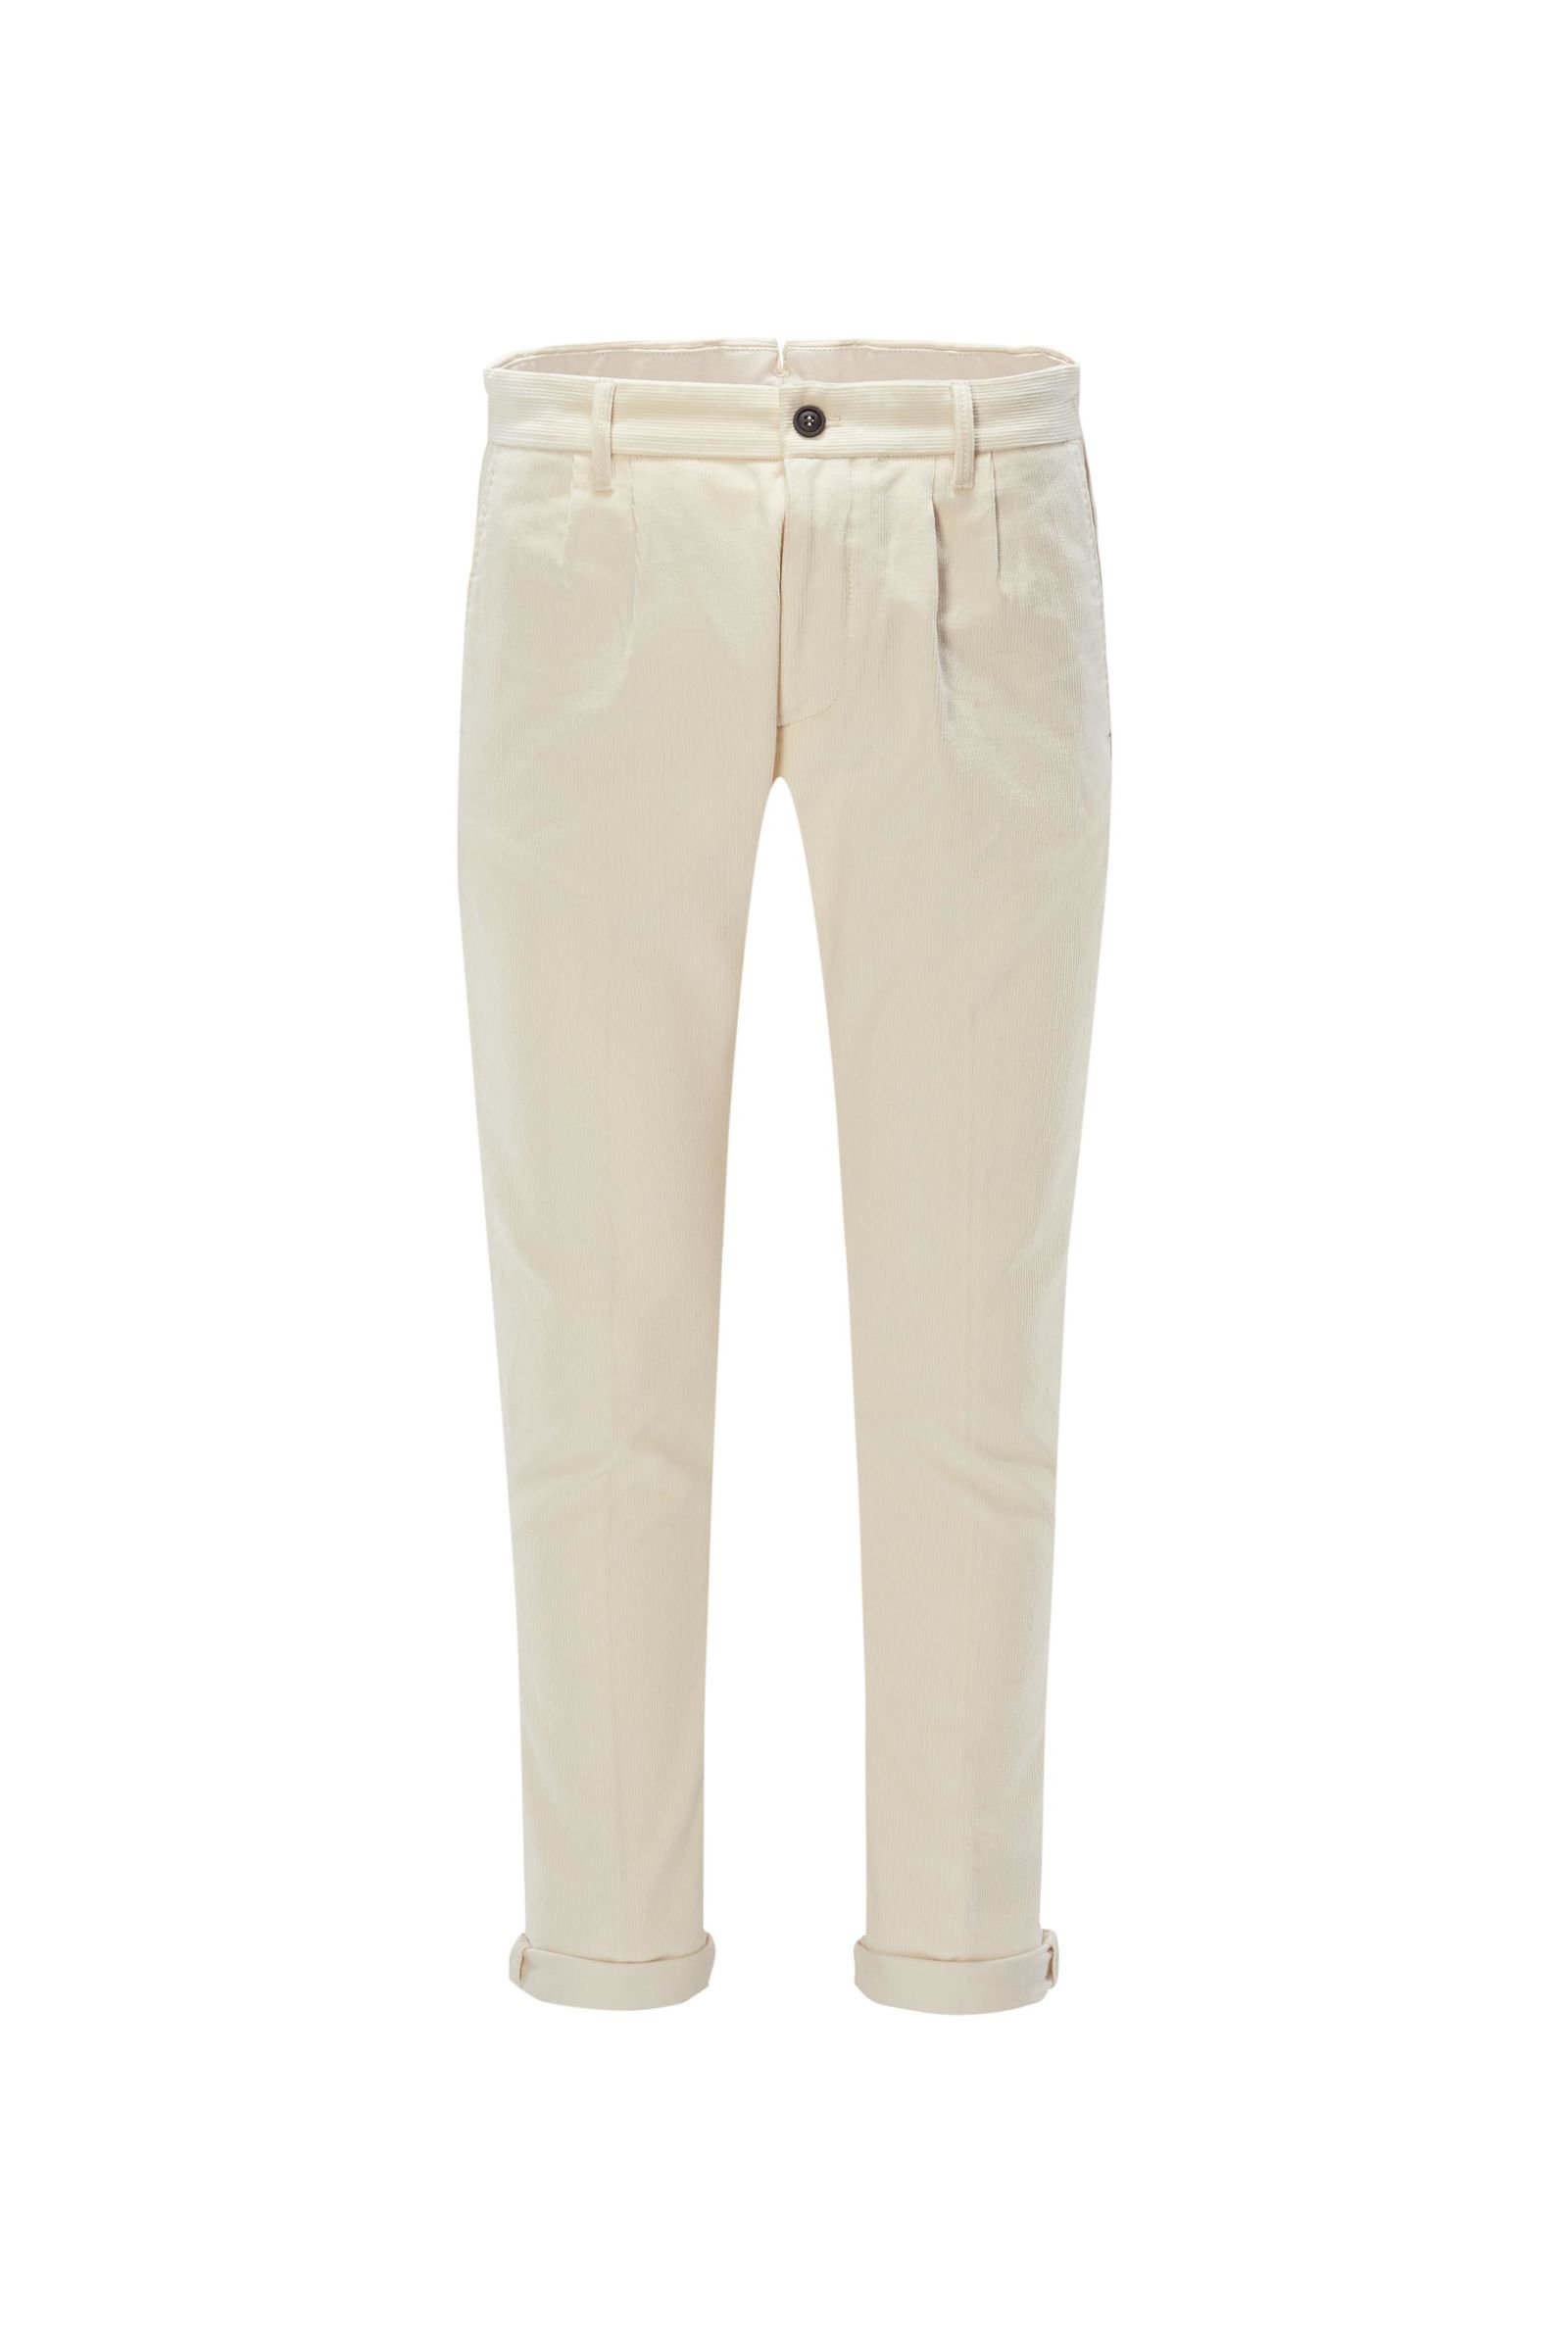 Corduroy trousers 'Pences AMF 17/32-45' cream